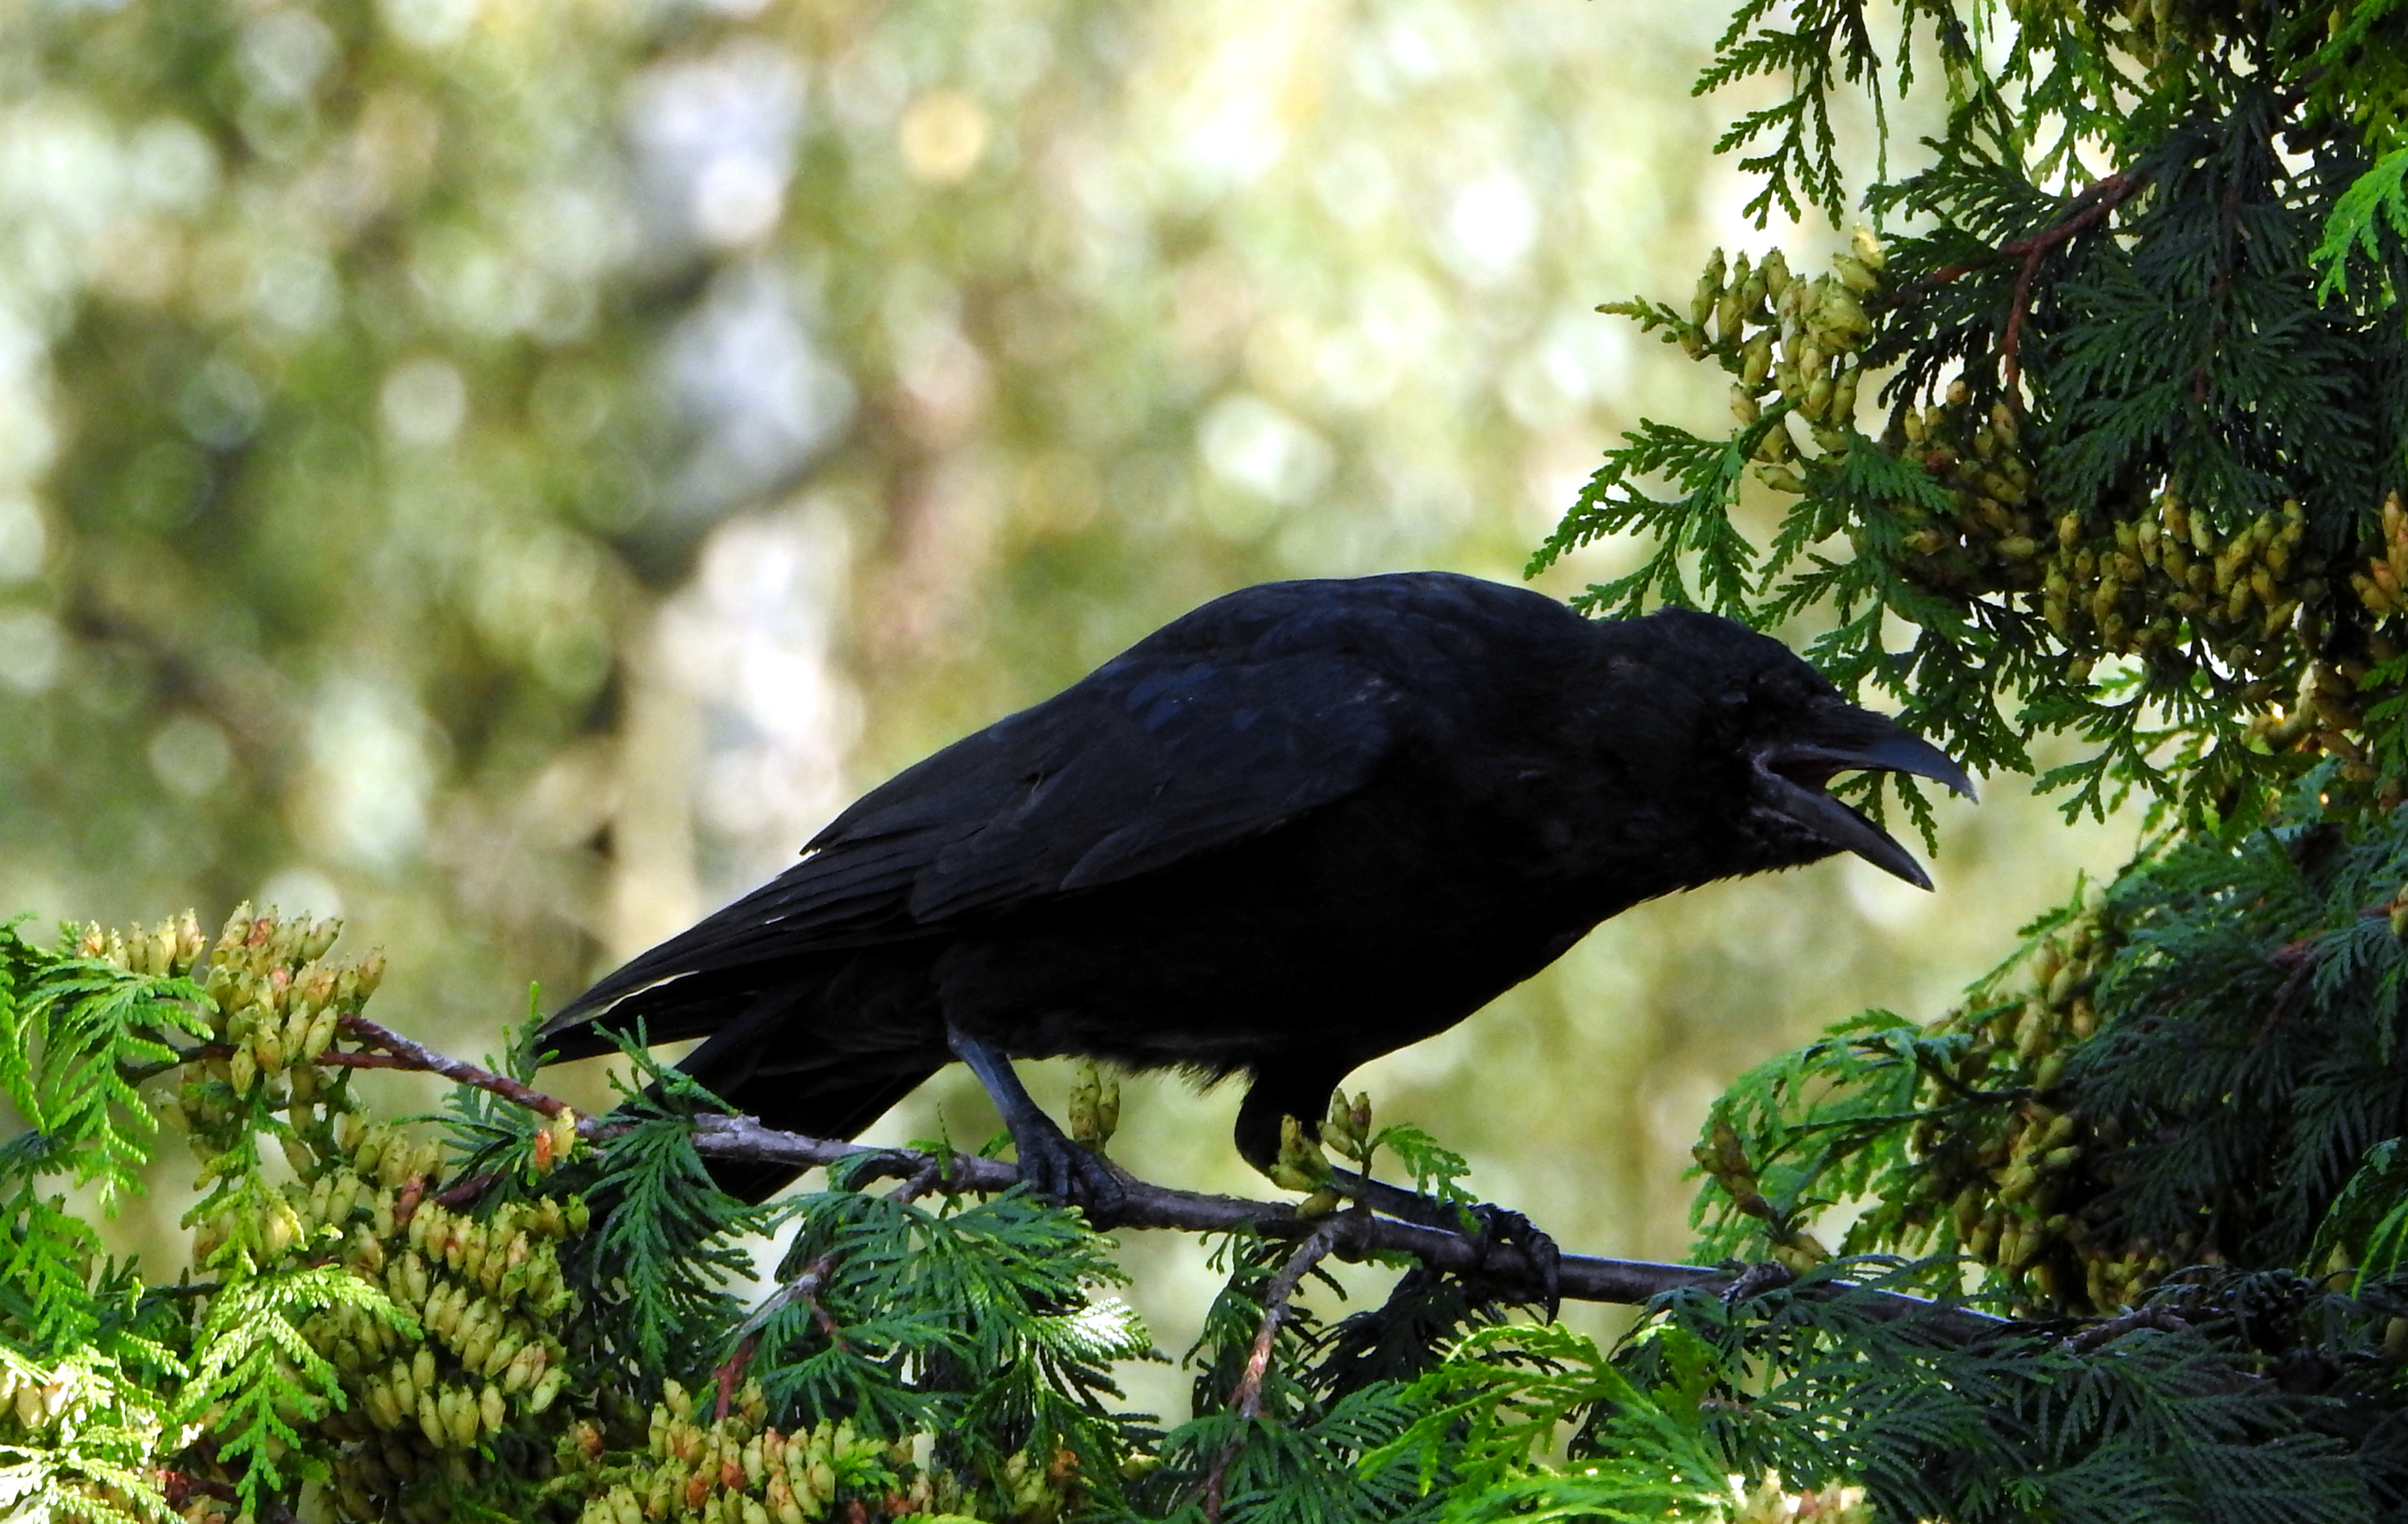 The singing raven